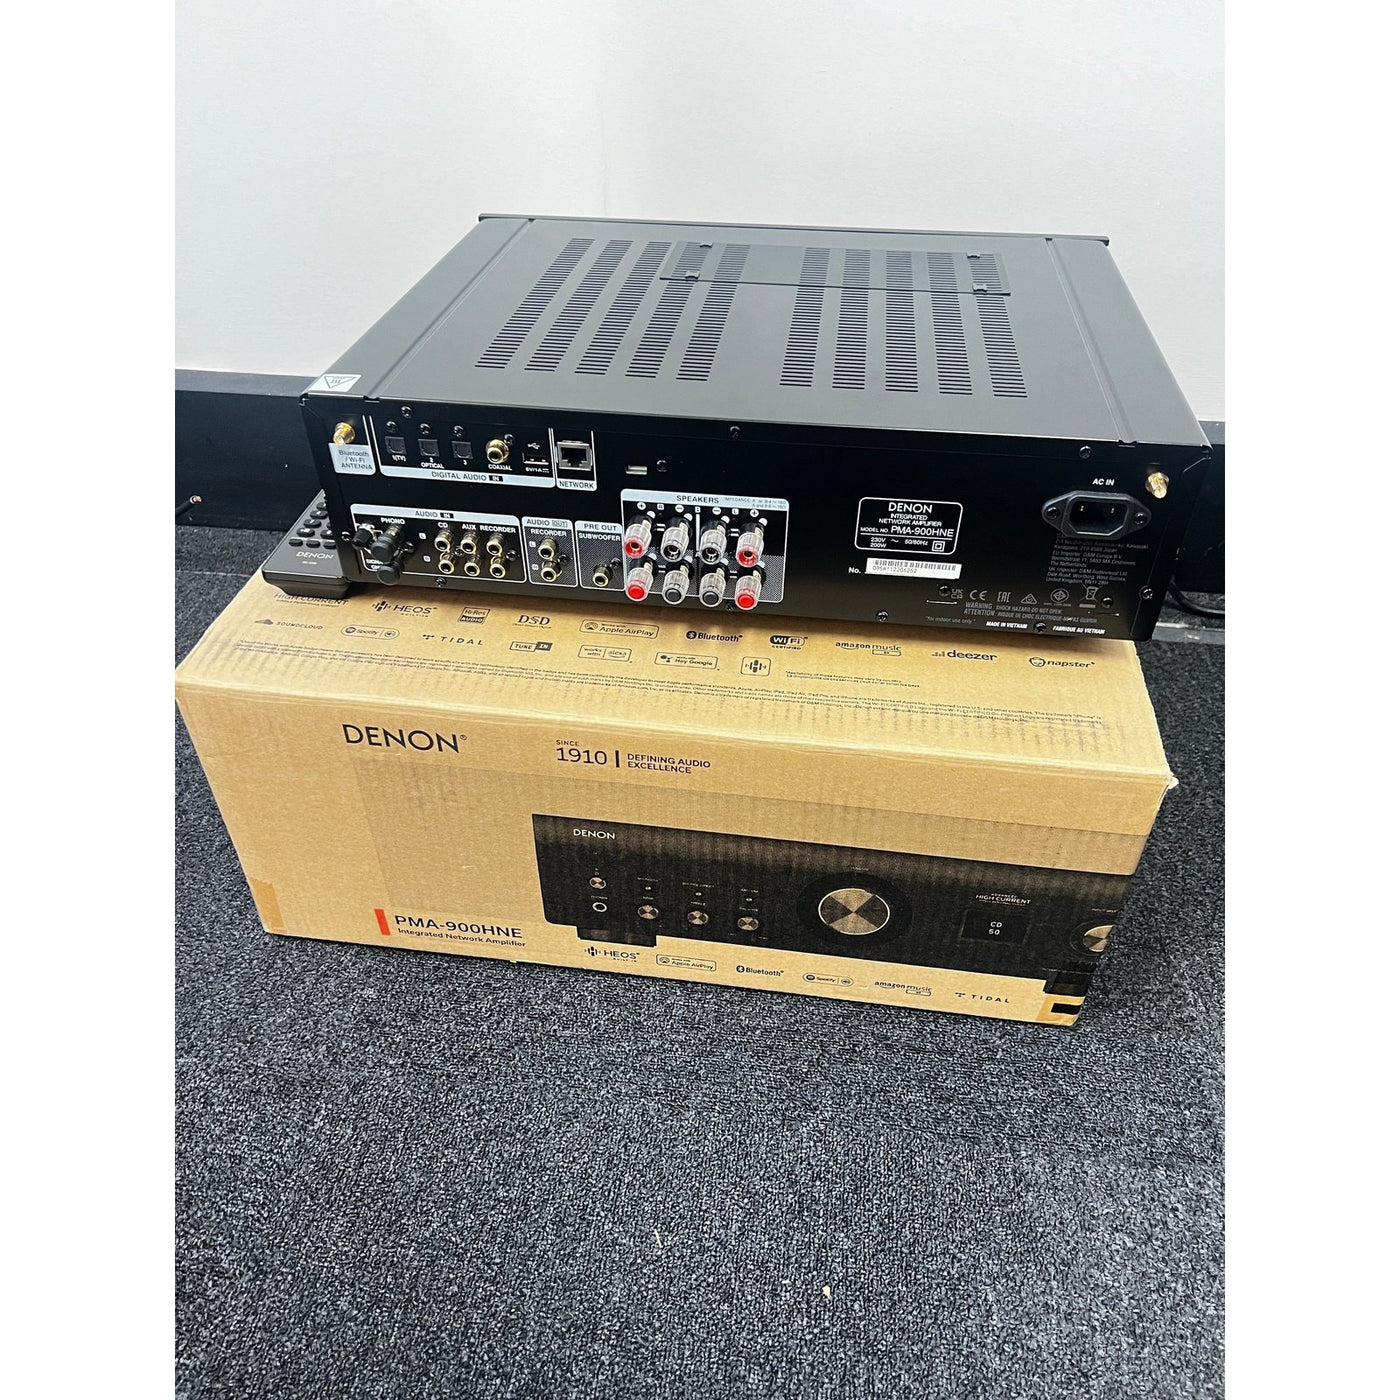 Denon Denon PMA-900HNE Stereo Integrated Amplifier - Ex Demo Unit From Sydney HiFi Show Integrated Amplifiers